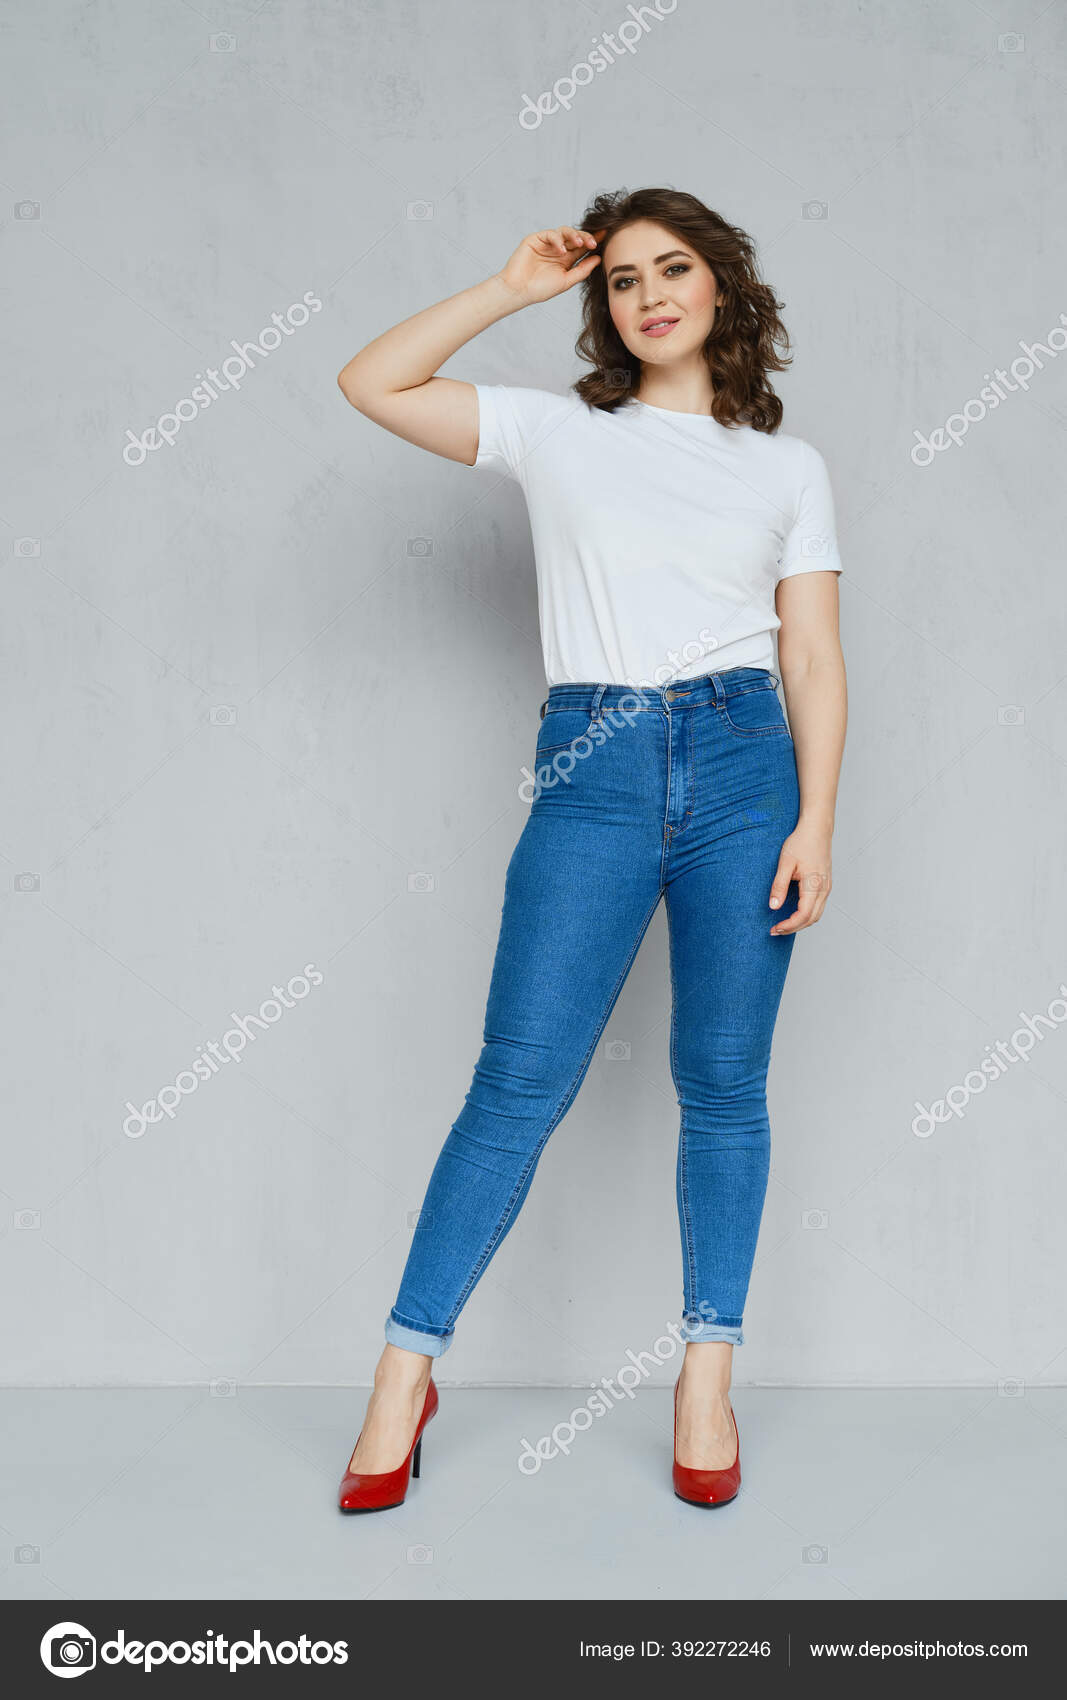 Basics - Blue Jeans, White Shirt